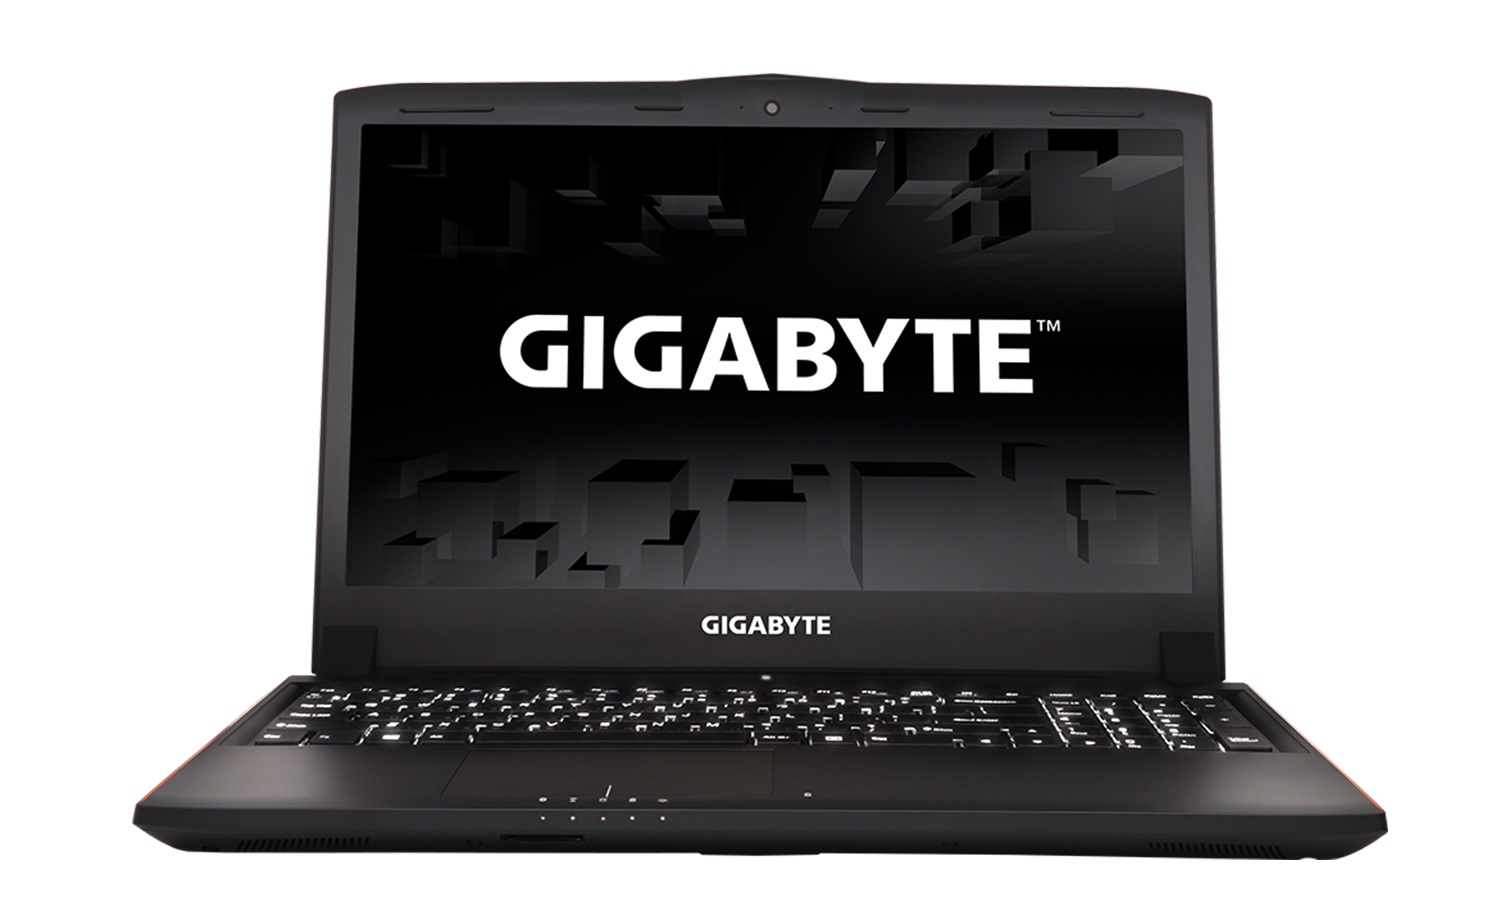 GIGABYTE P55 V6 Intel Core i7 6th Gen 16GB RAM 256GB SSD 1TB HDD Windows 10 Home Nvidia GeForce GTX 1060